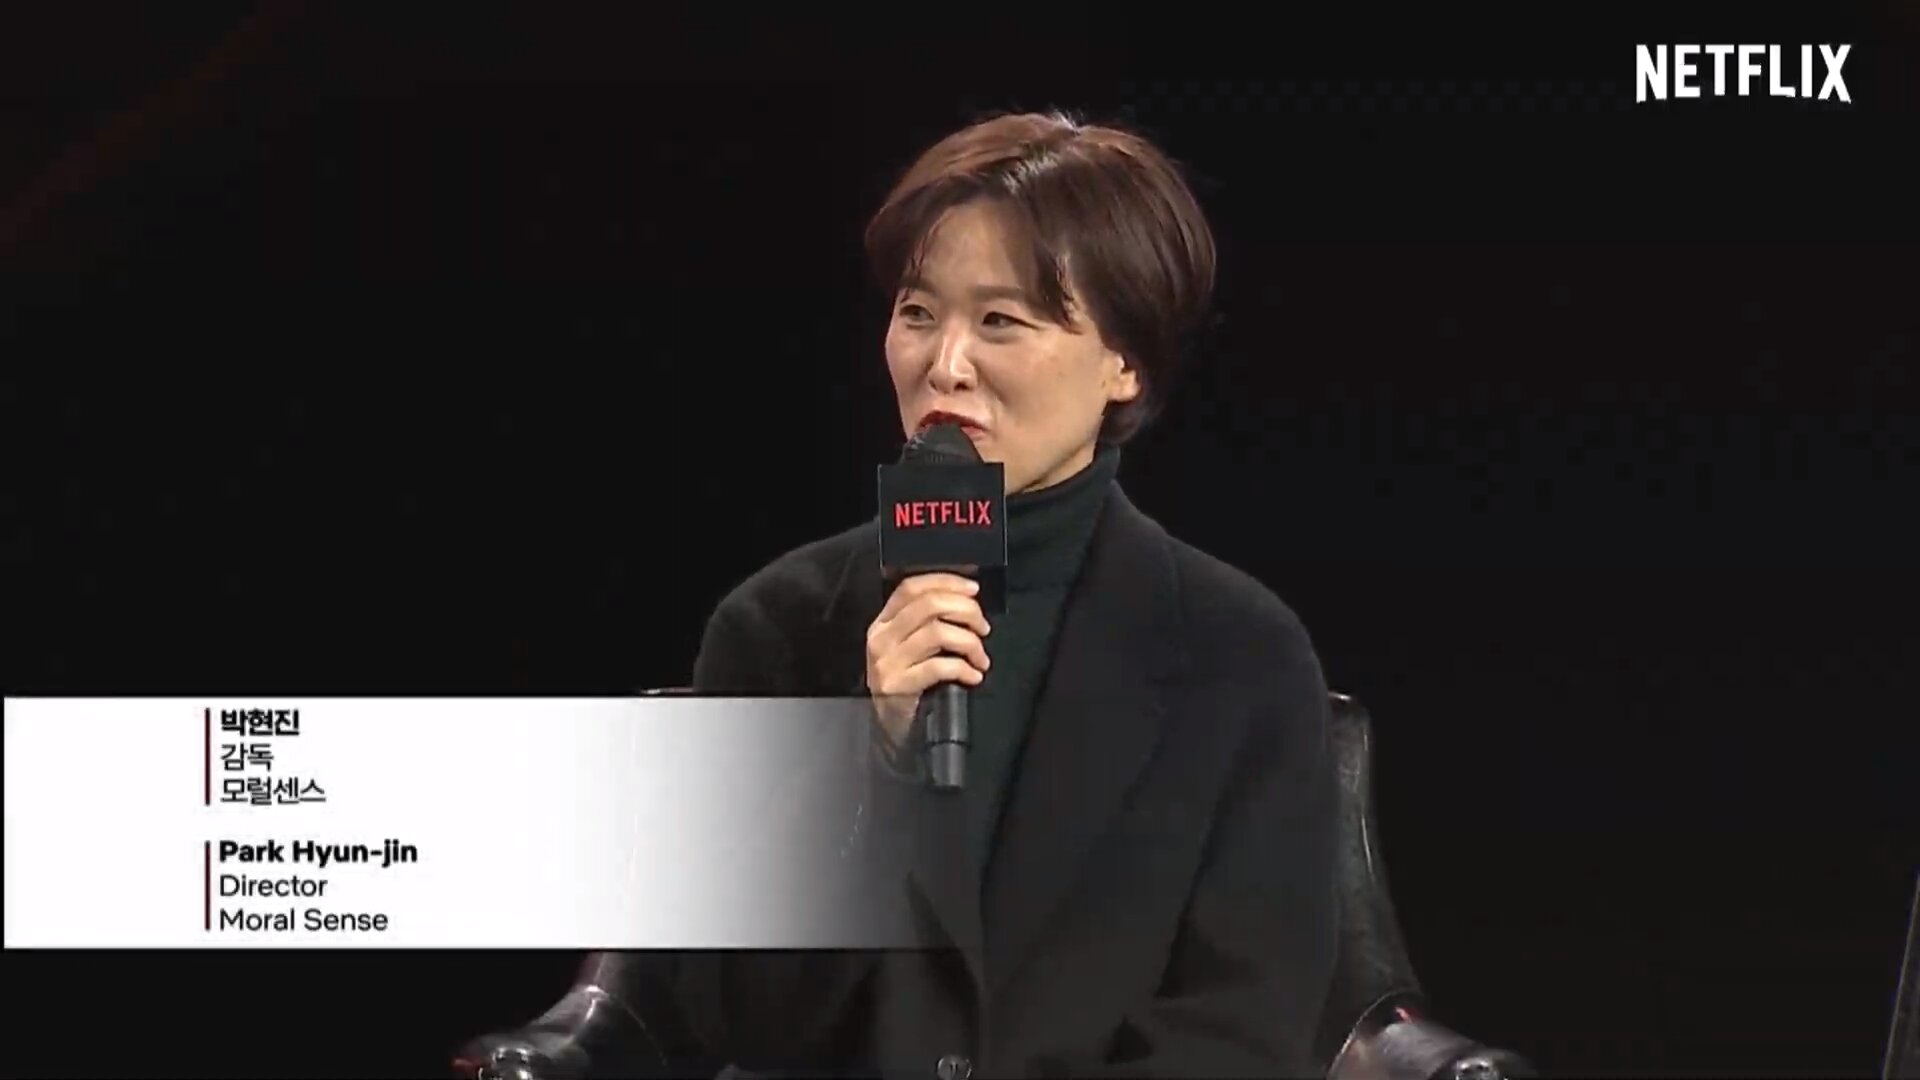 Director of MORAL SENSE, Park Hyun Jin © Netflix